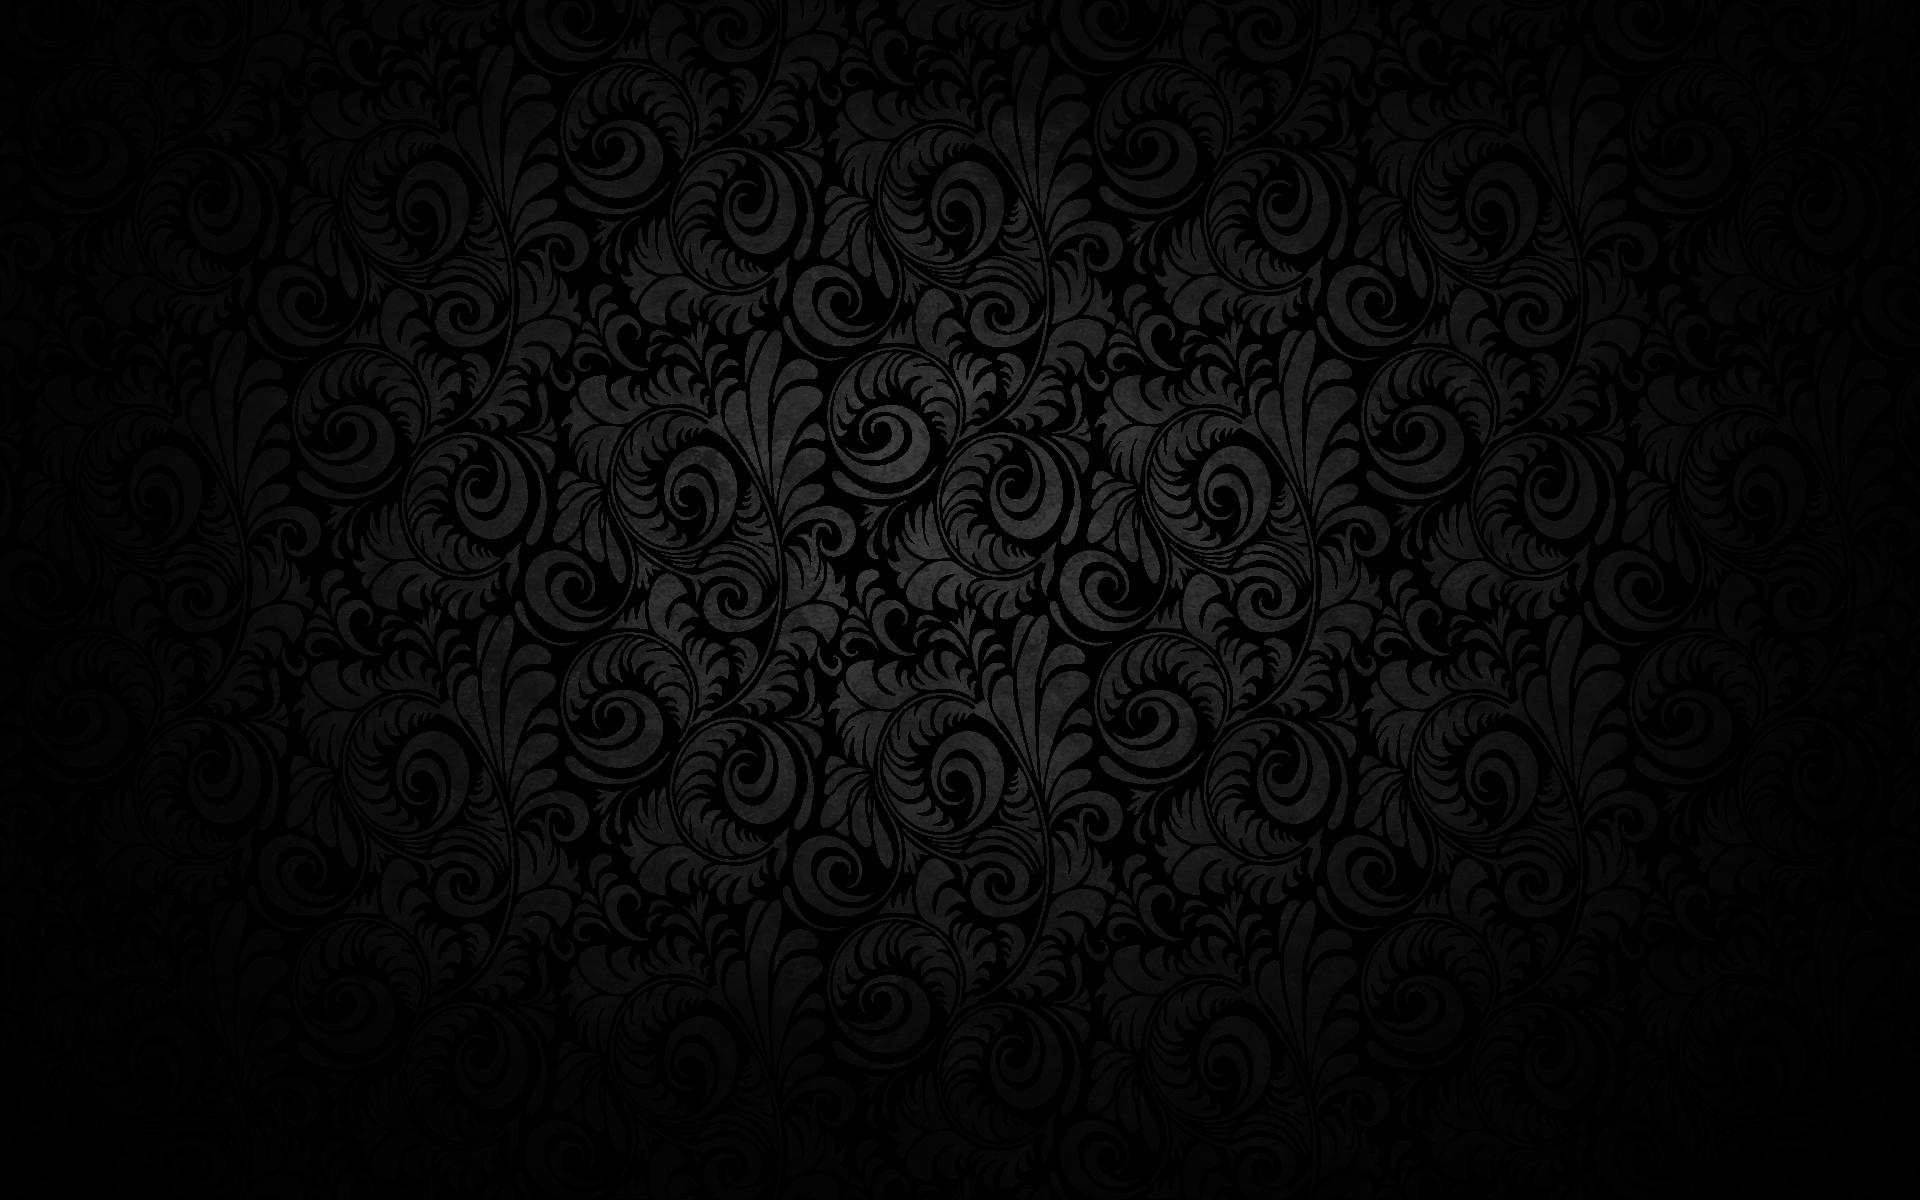 Black Gothic Wallpapers - Los mejores fondos de Black Gothic gratis